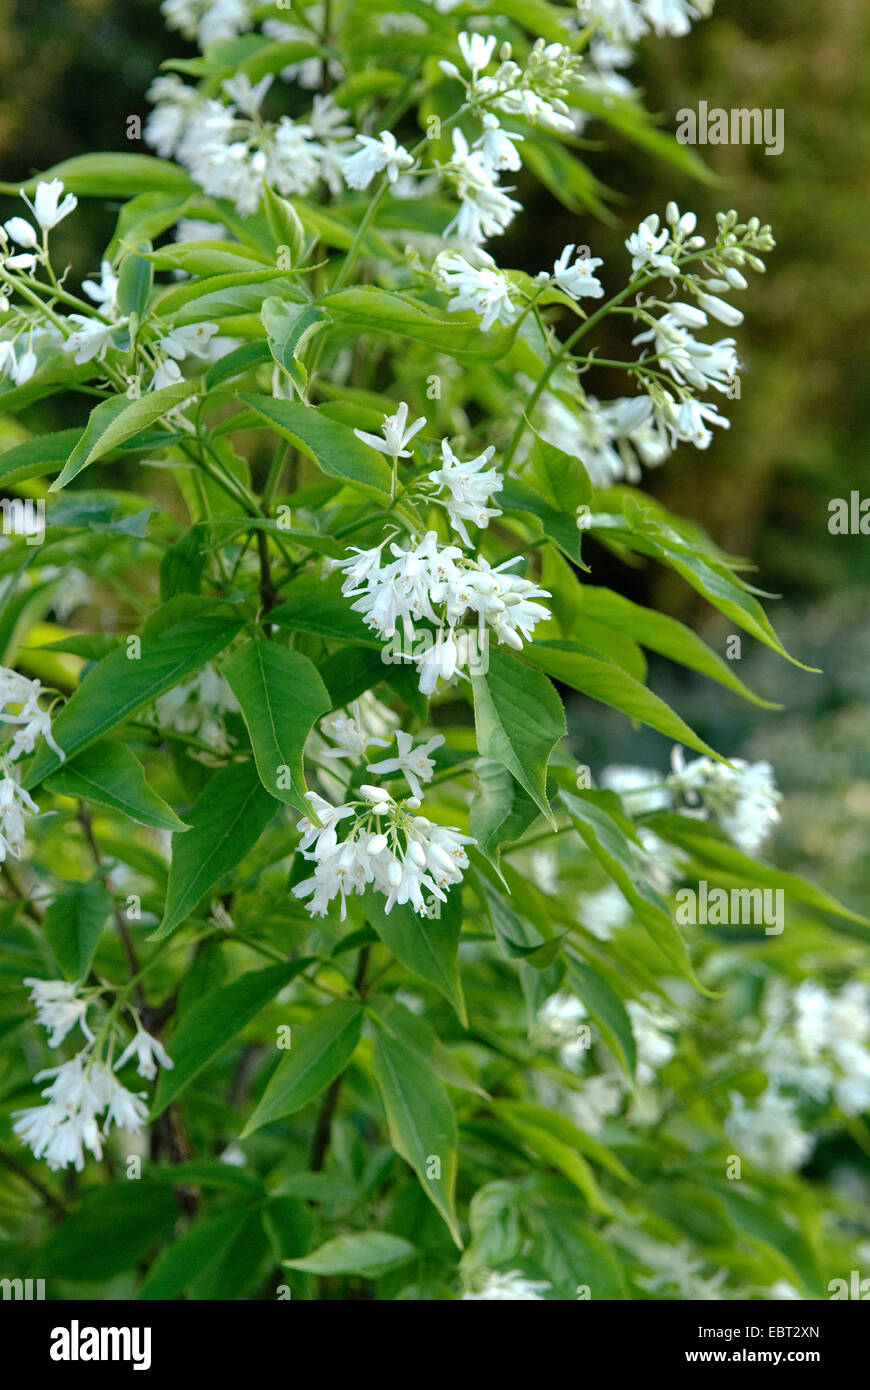 Colchis bladdernut, Bladdernut (Staphylea colchica), blooming Stock Photo